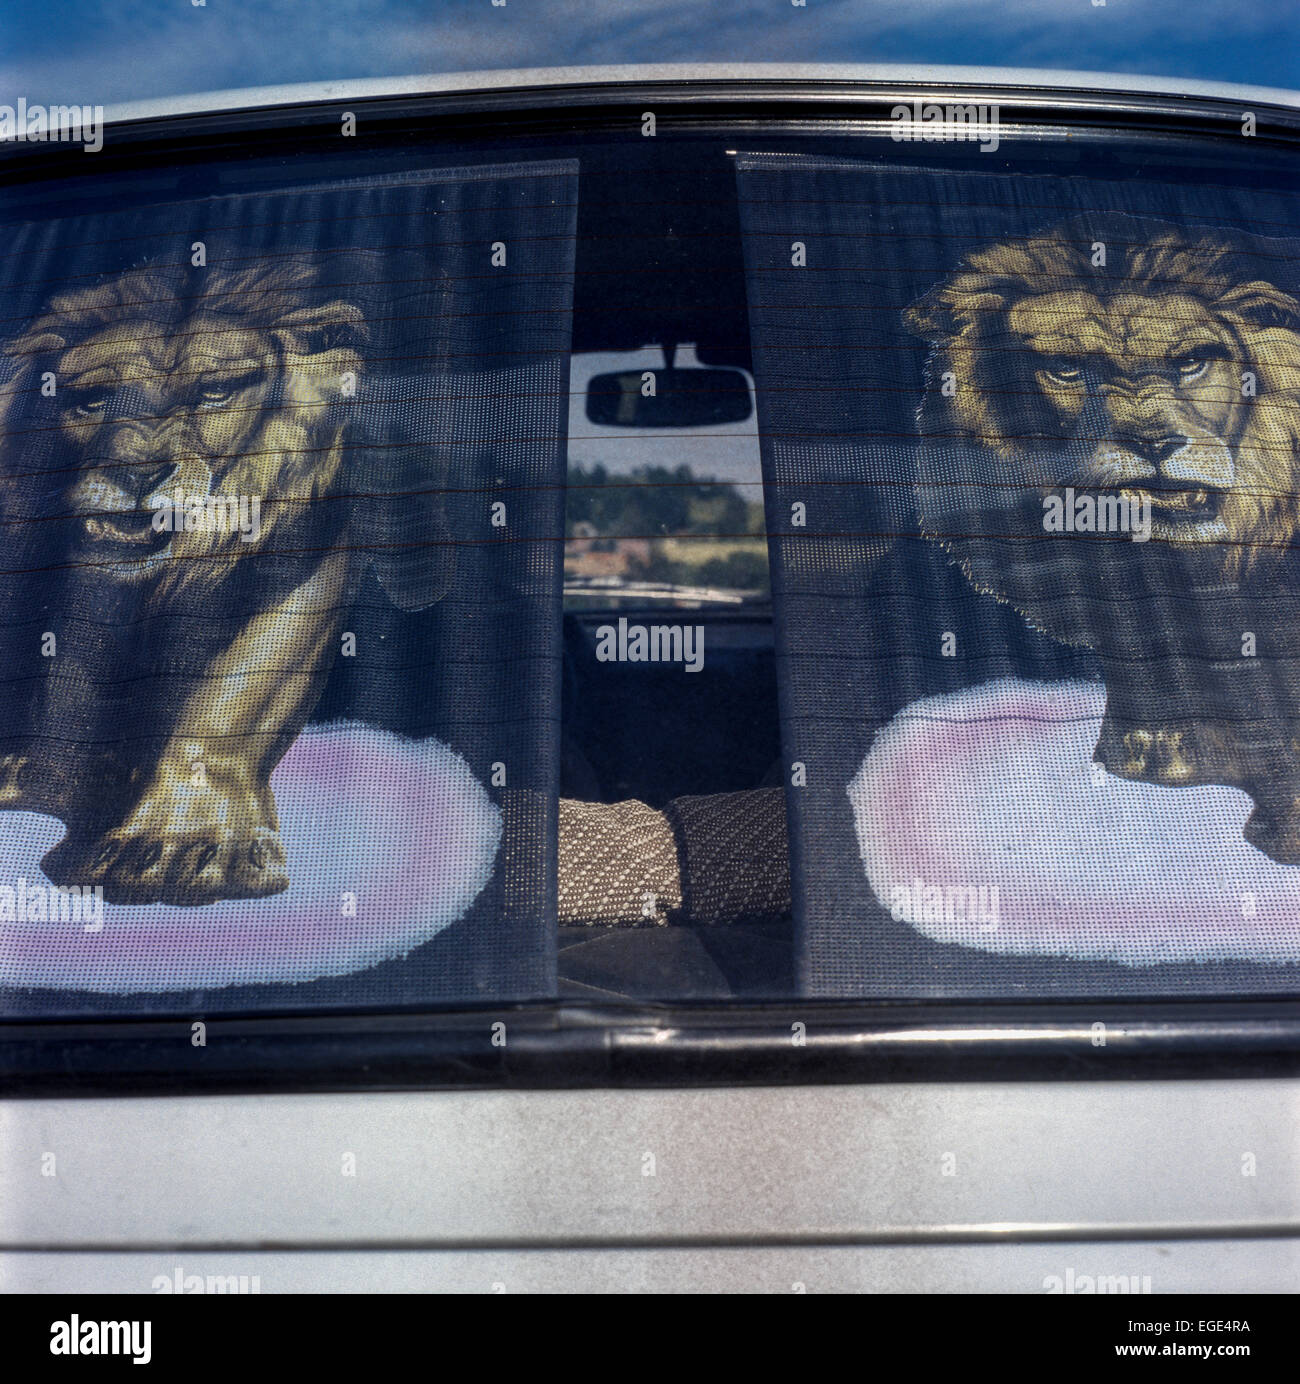 Hic sunt leones - Car sun shade, Skoda 120 tunning Stock Photo